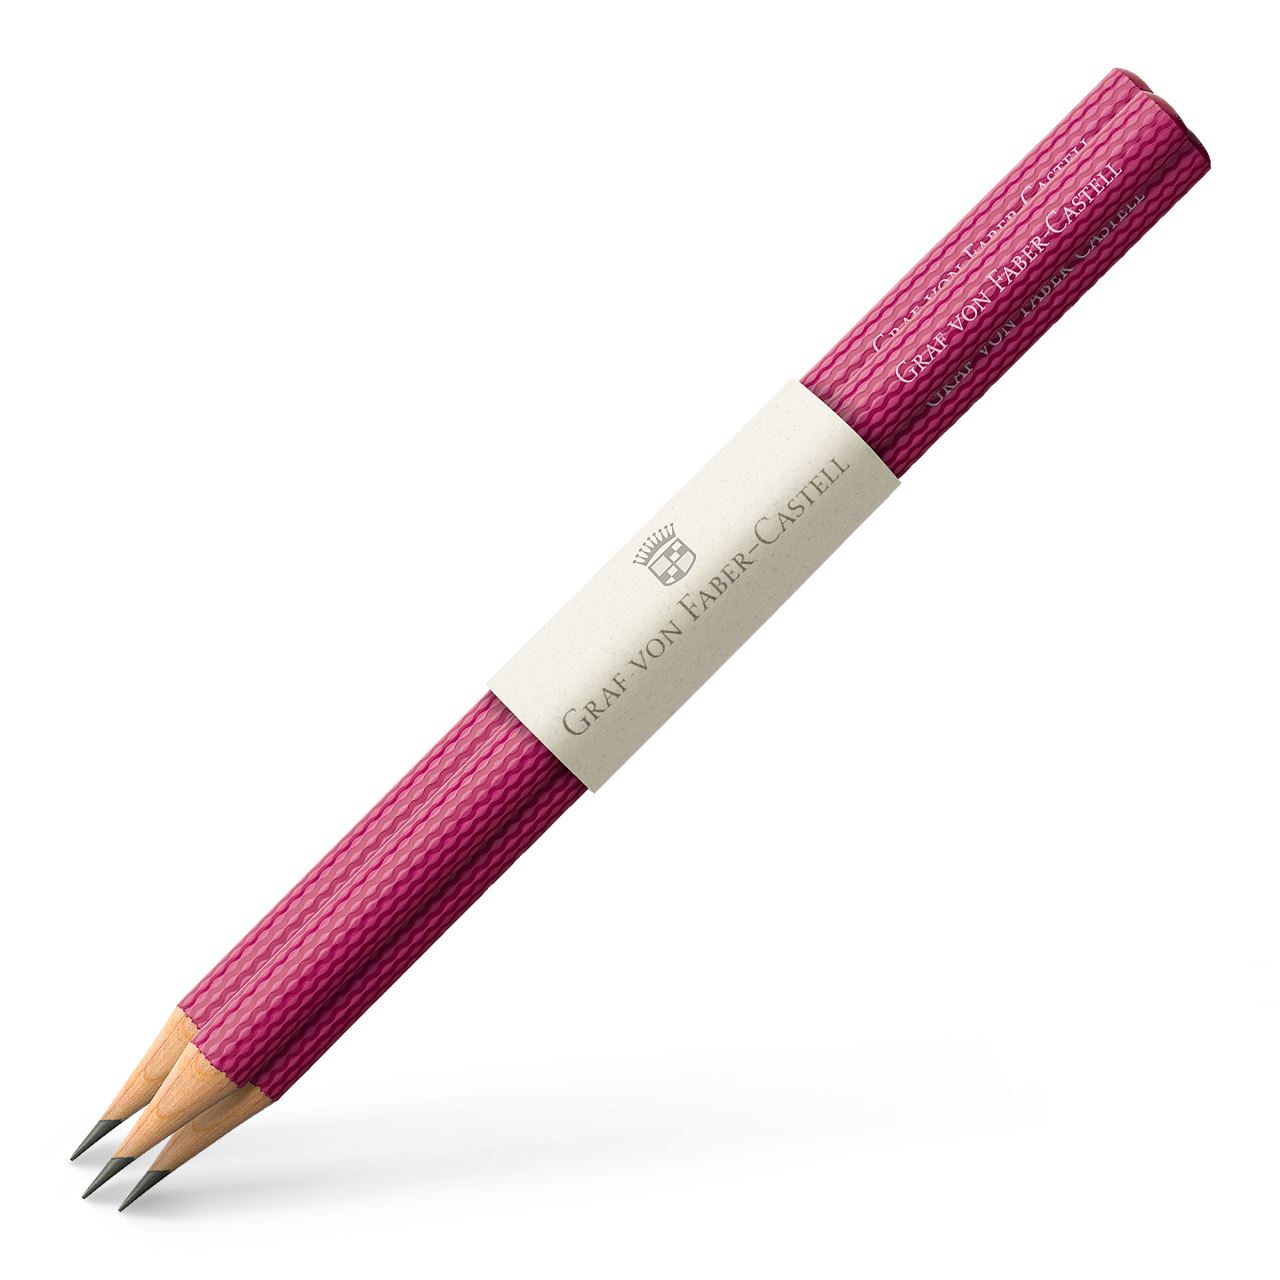 Graf-von-Faber-Castell - 3 graphite pencils Guilloche, Electric Pink